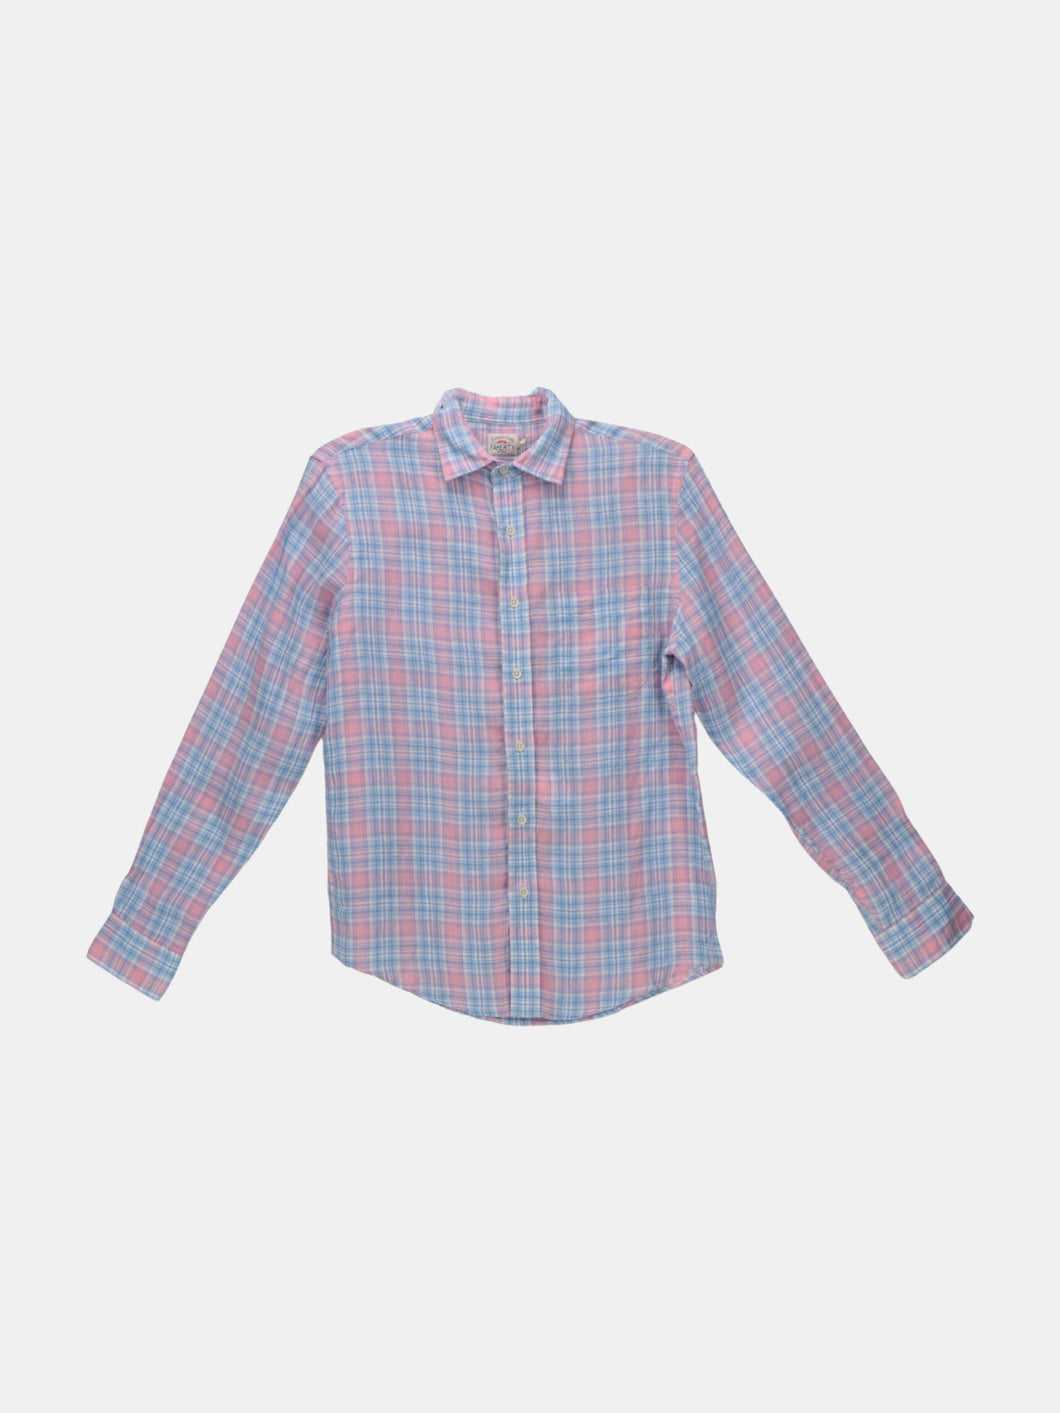 Faherty Men's Rose / Blue Plaid Linen Ventura Button Down Casual Button-Down Shirt - S